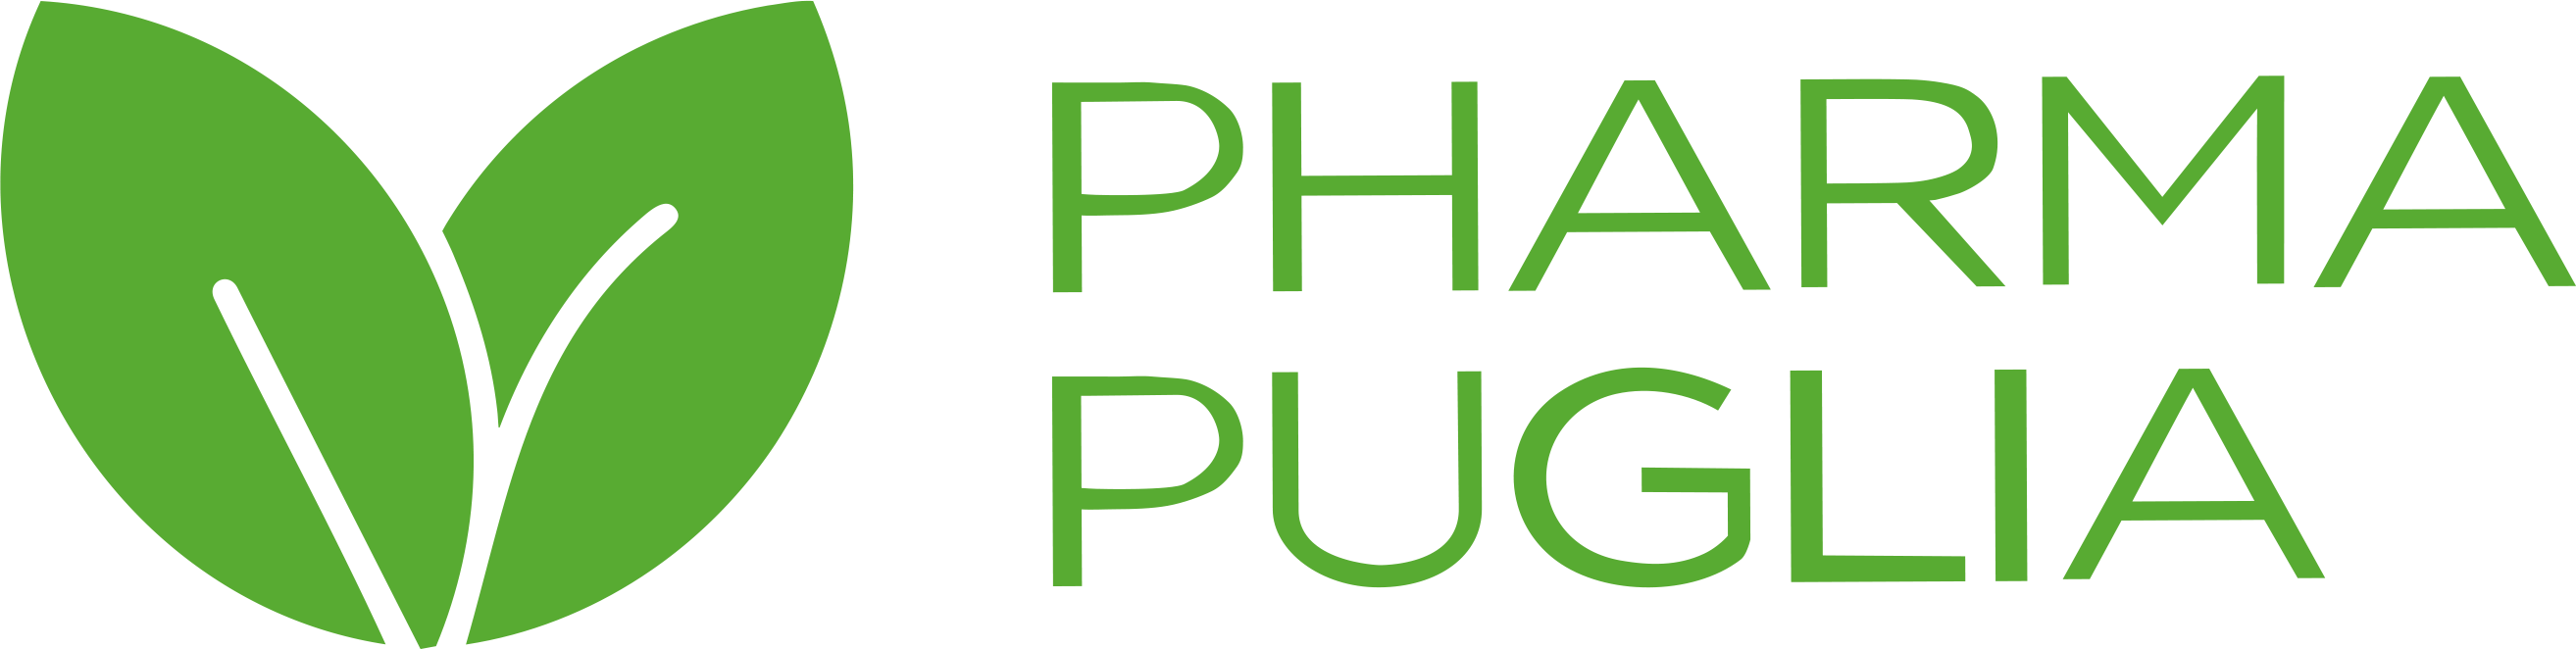 Pharma Puglia